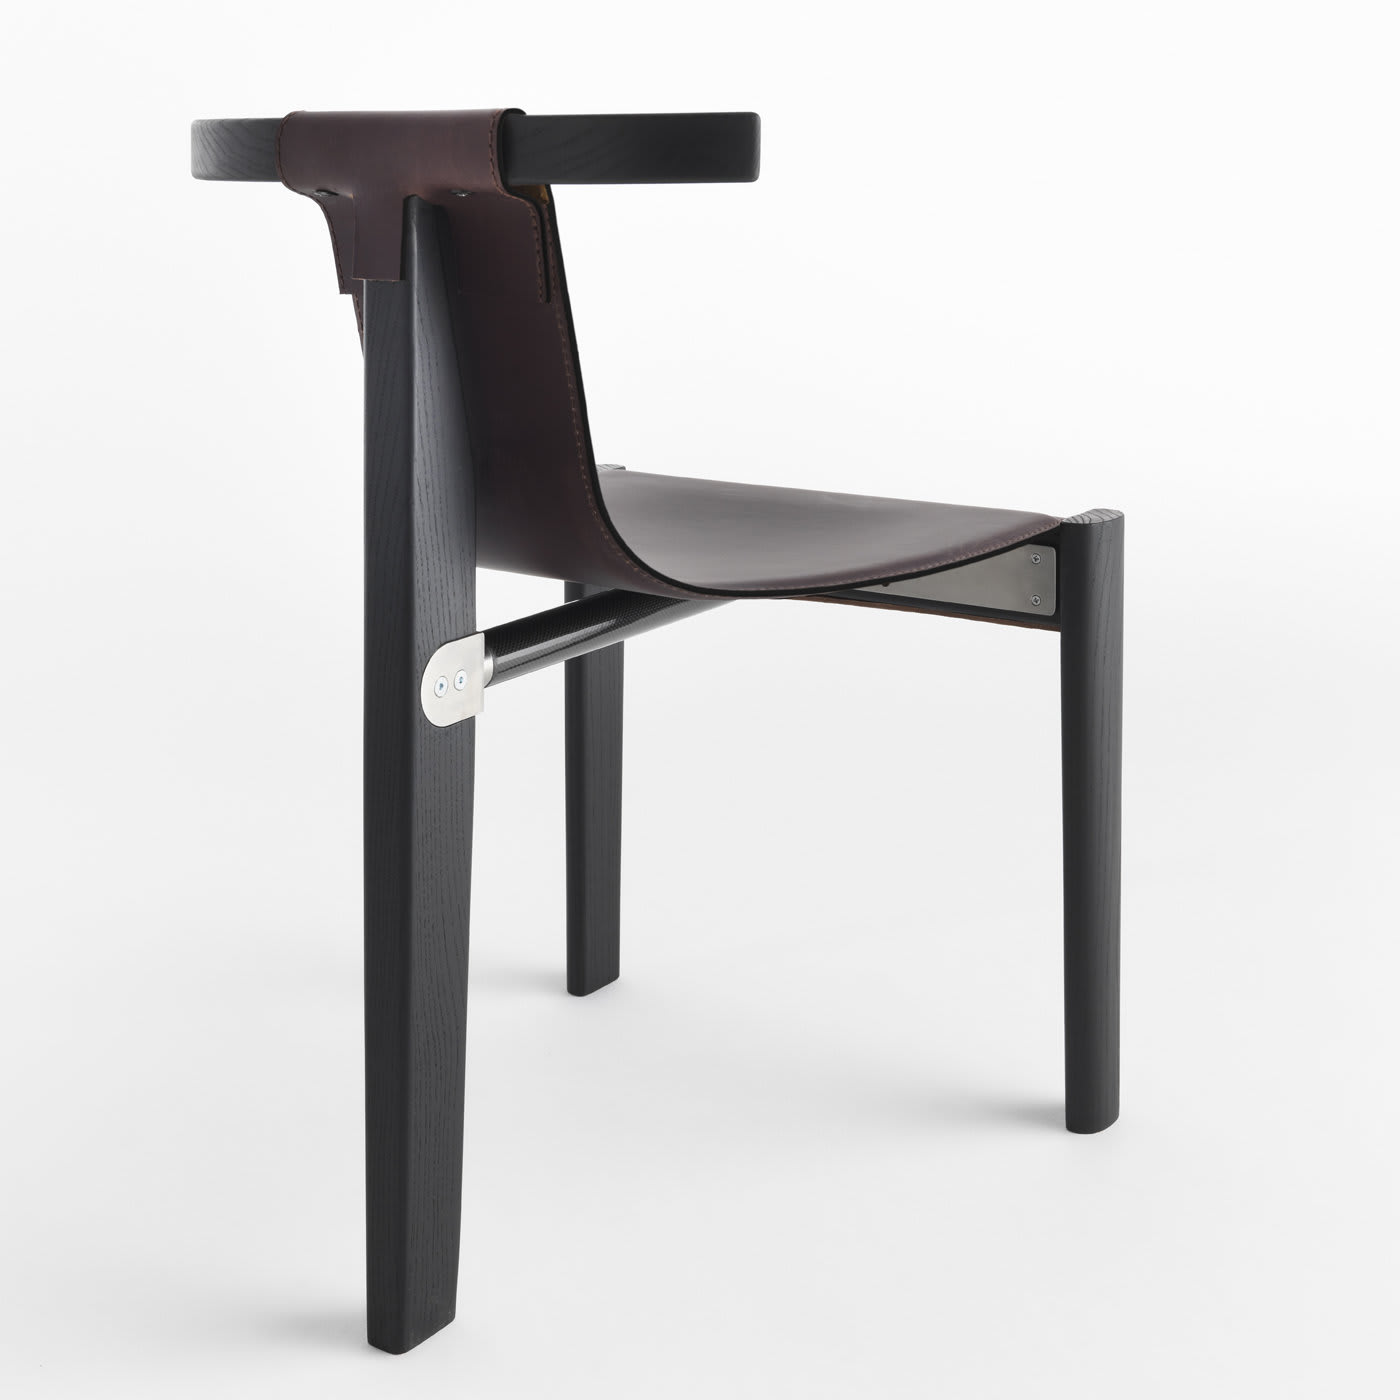 Pablita Brown Chair by Marcello Pozzi - Horm